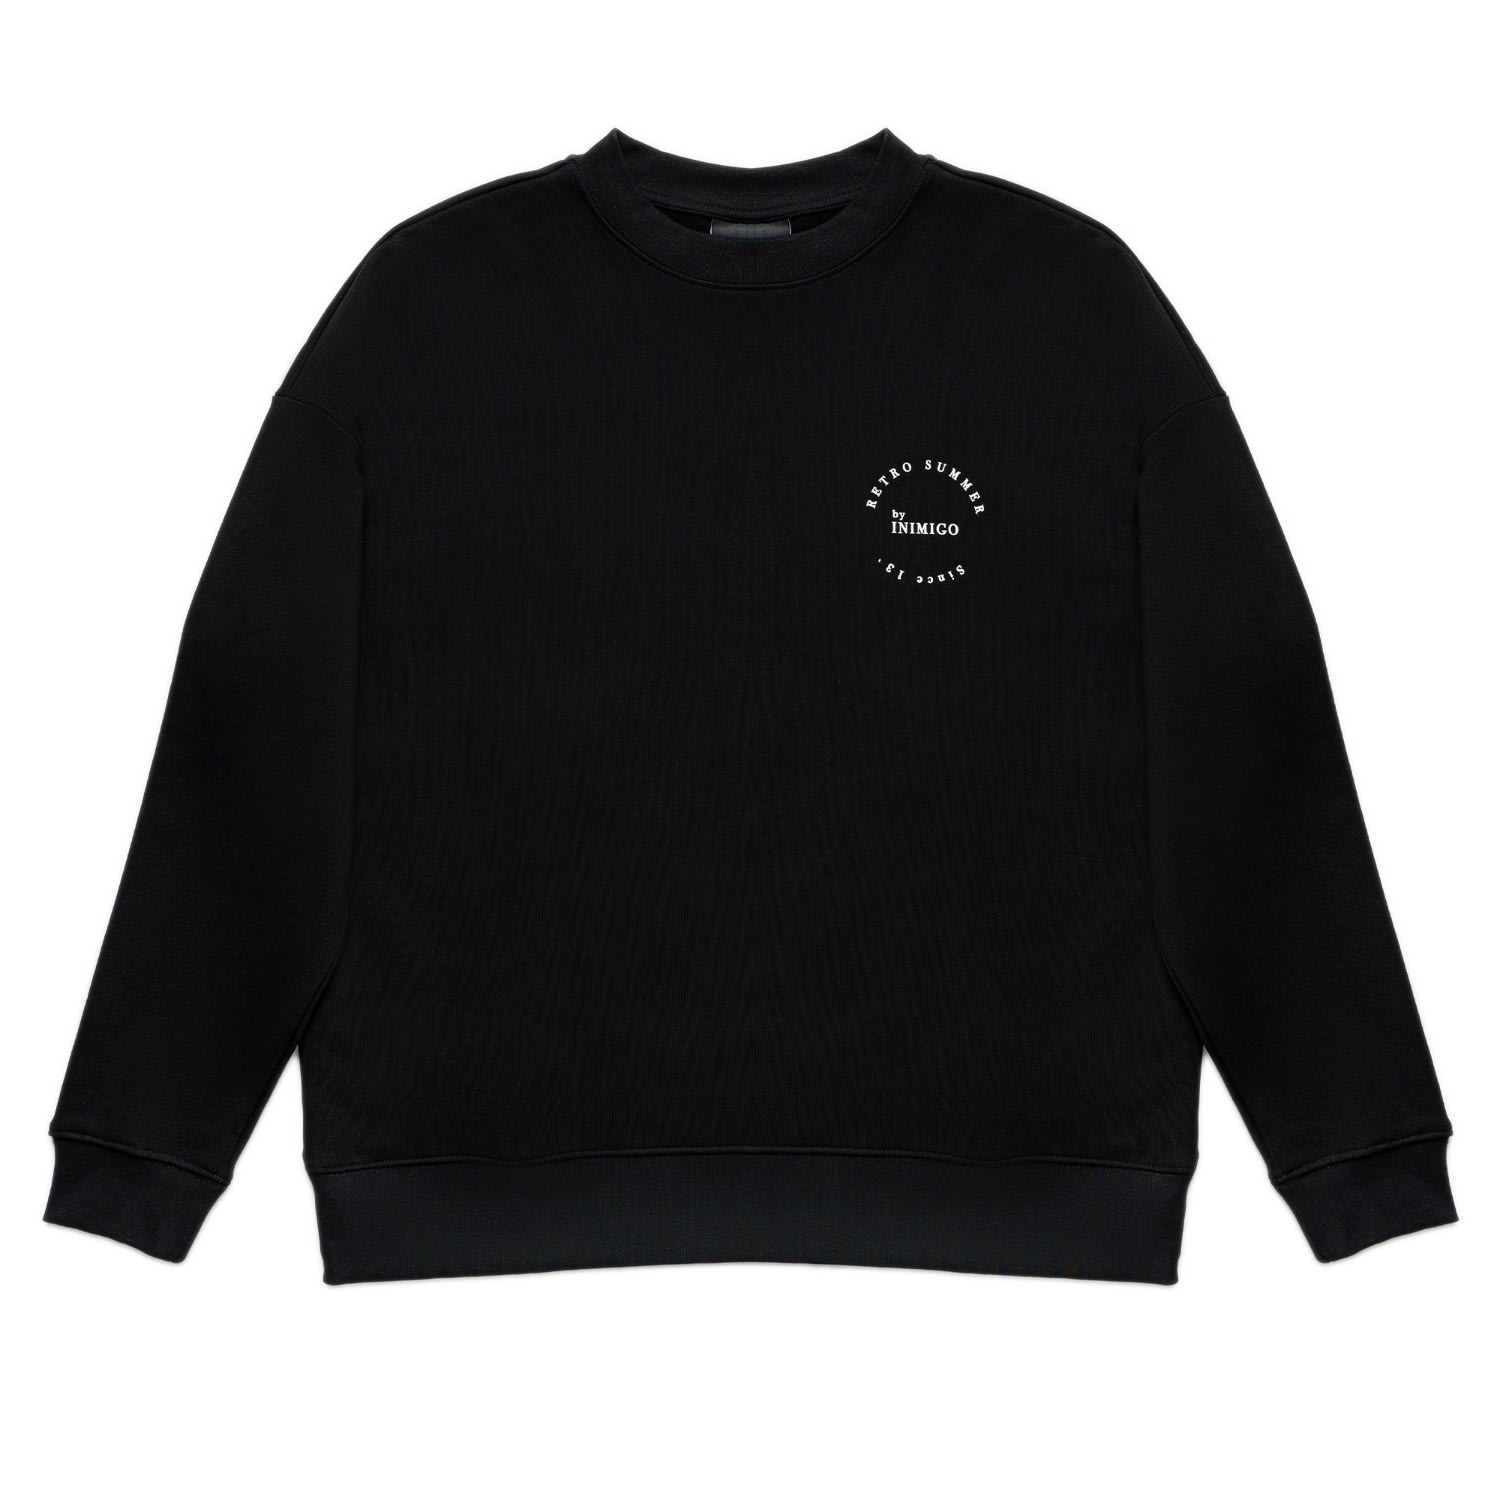 Men's Black 80'S Sun Lounger Oversized Sweatshirt Small INIMIGO